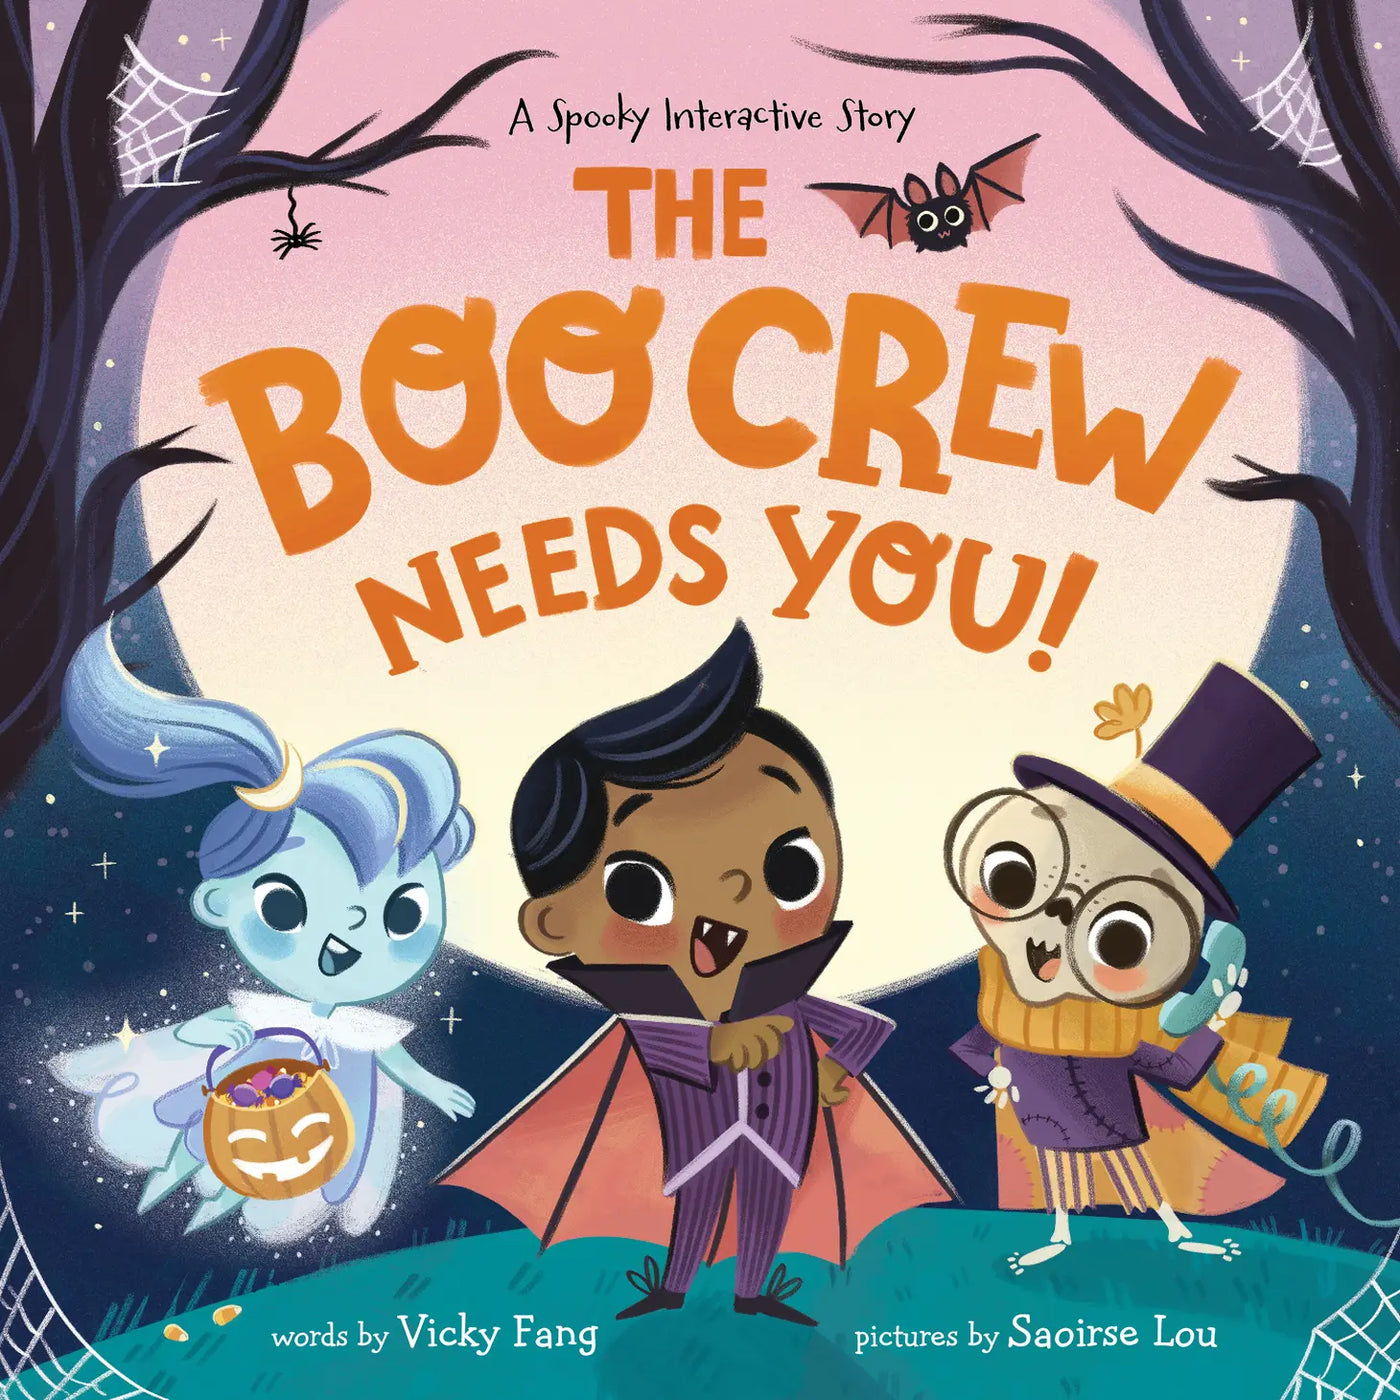 Boo Crew Needs YOU!